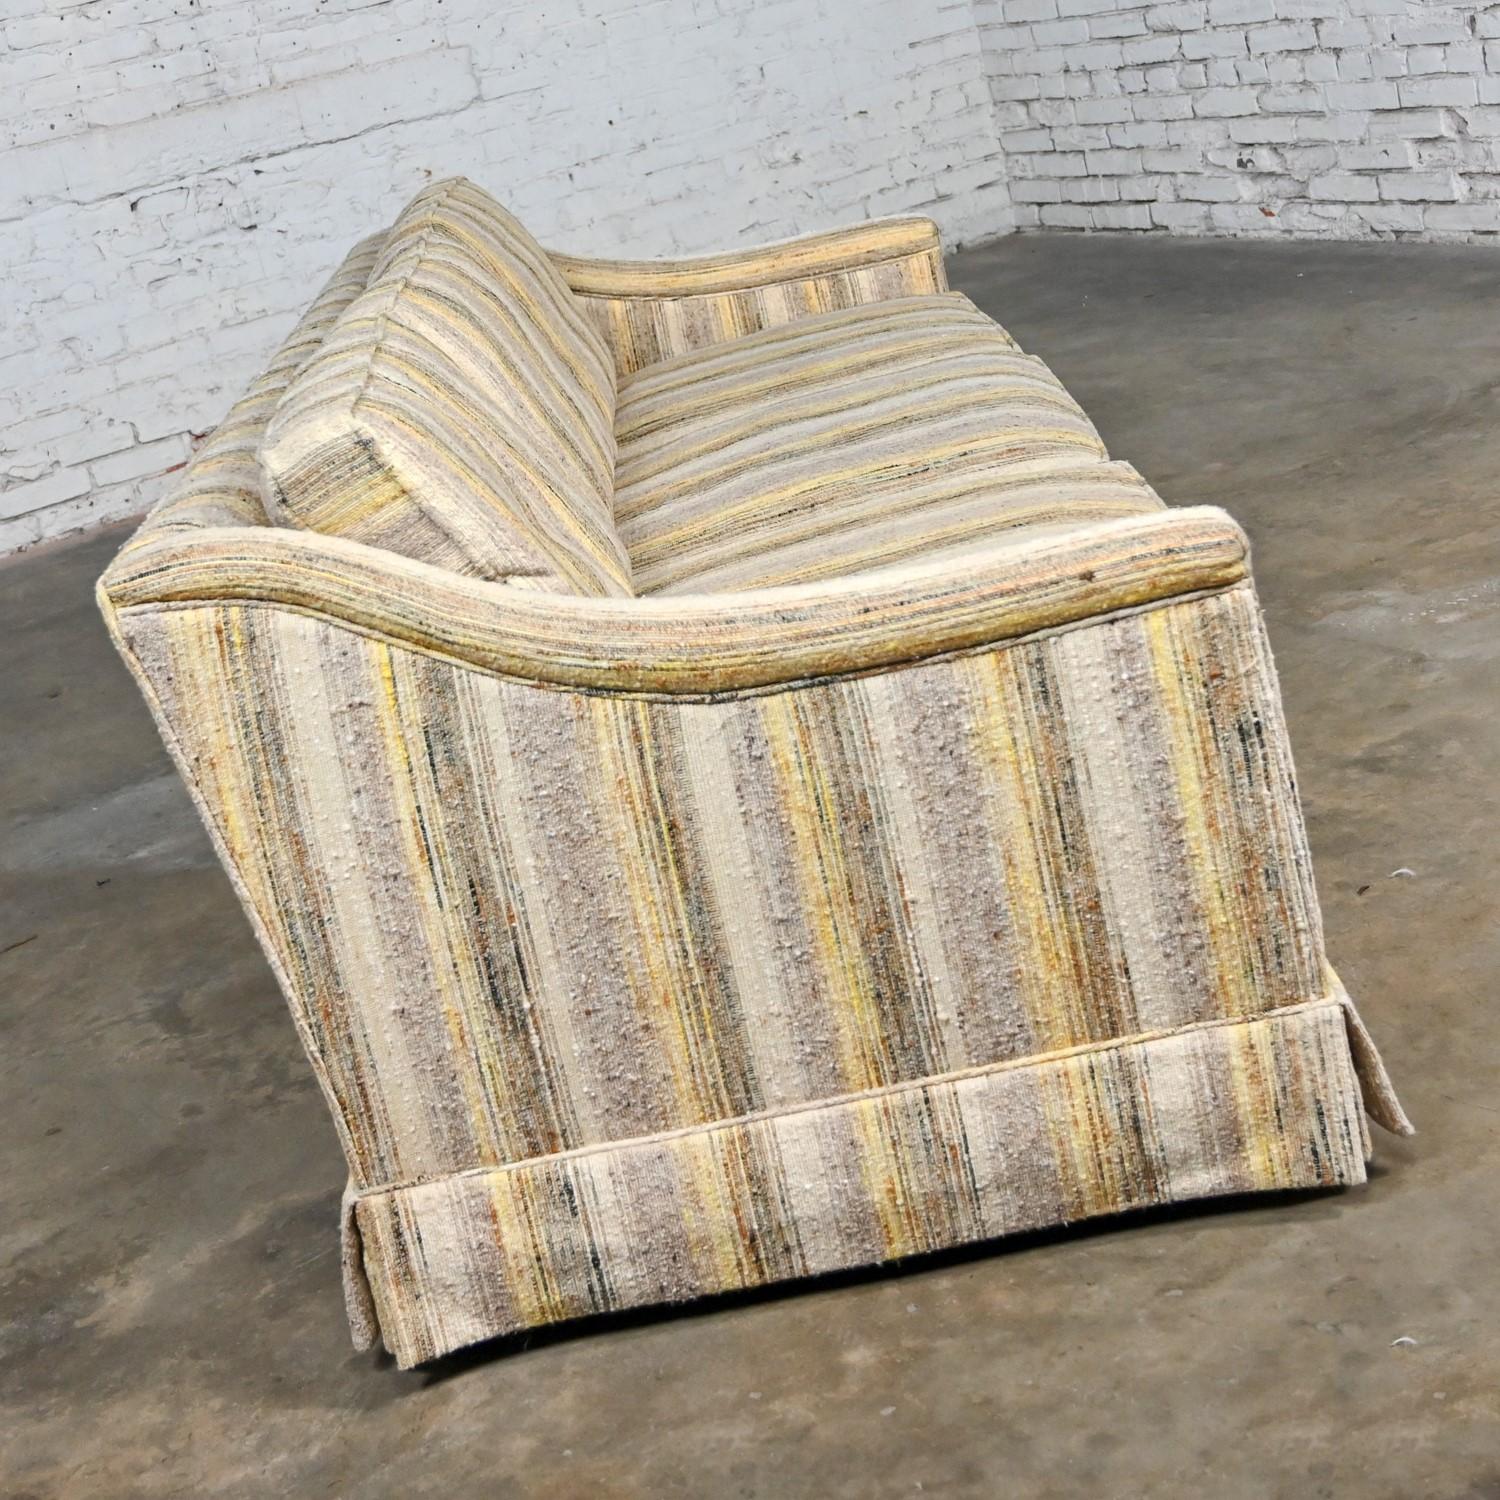 20th Century Mid-Century Modern Henredon Sofa Modified Lawson Style Yellow & Beige Striped For Sale